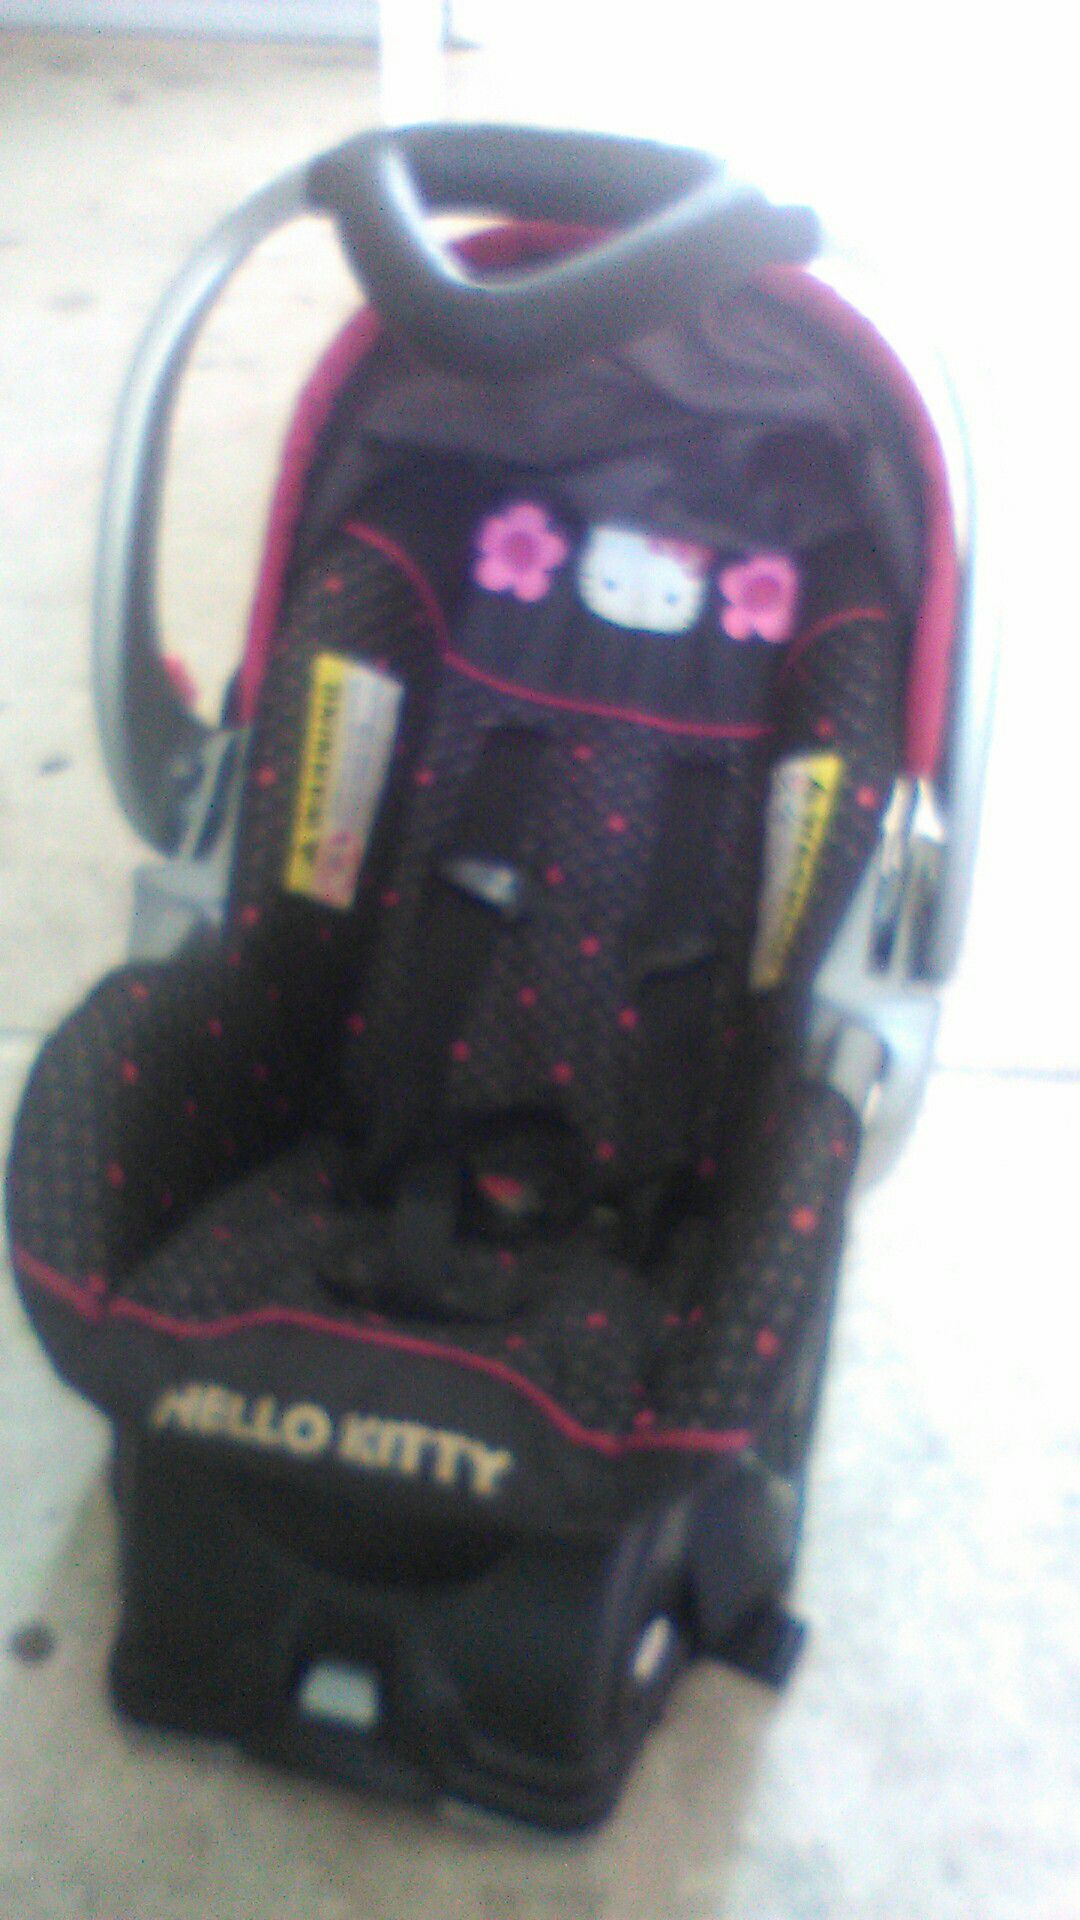 Hello Kitty car seat